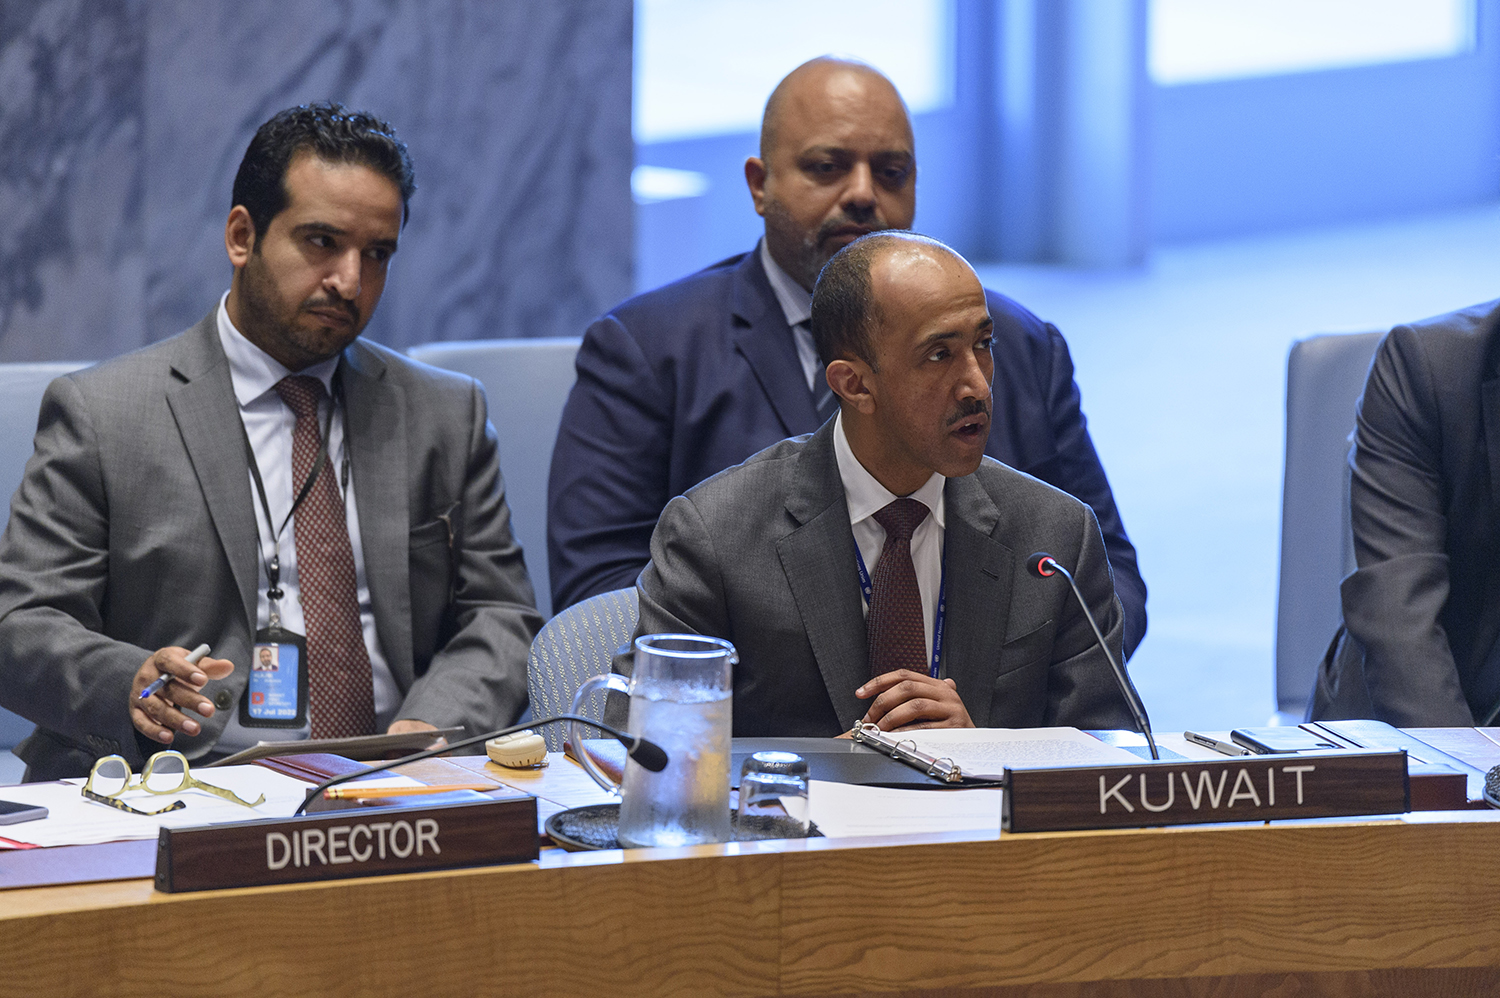 Kuwaiti permanent UN mission's Acting Charge d'Affaires Bader Al-Menaikh